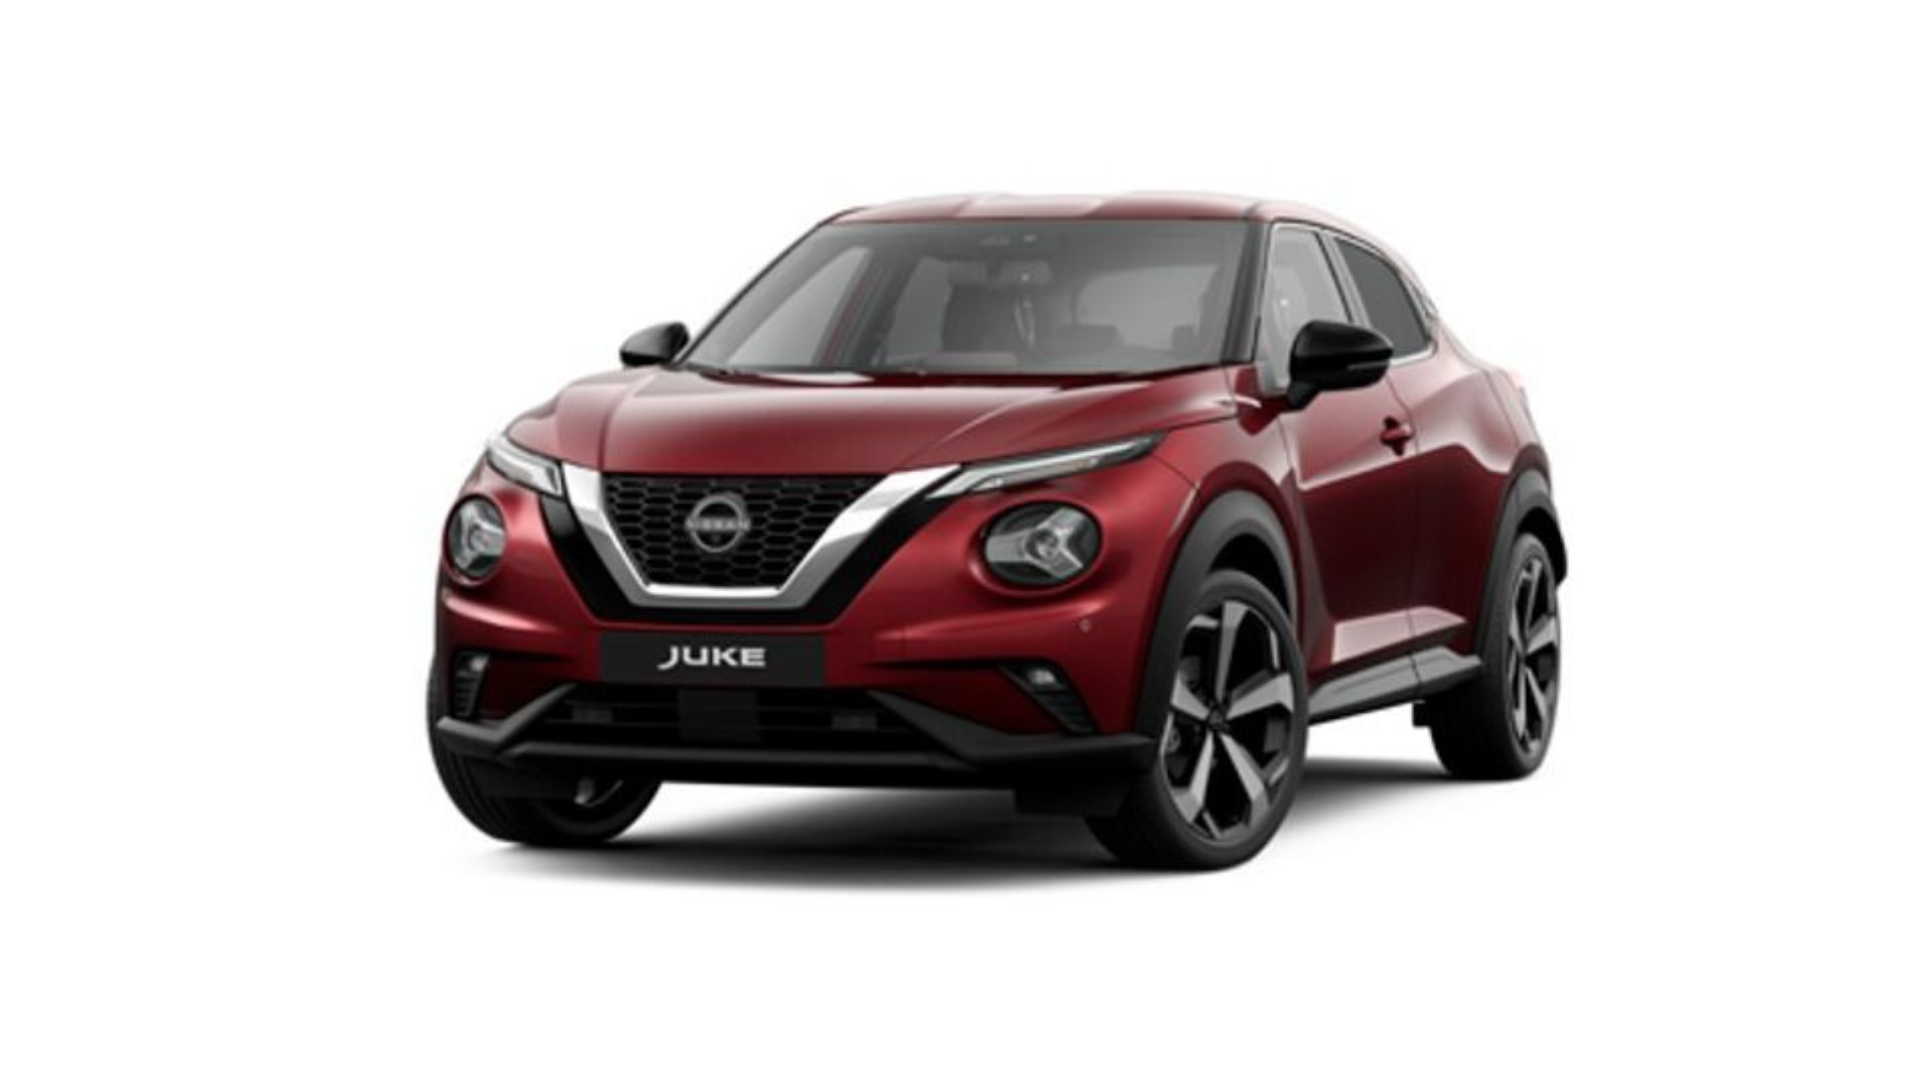 Nissan-Juke-Renting-1